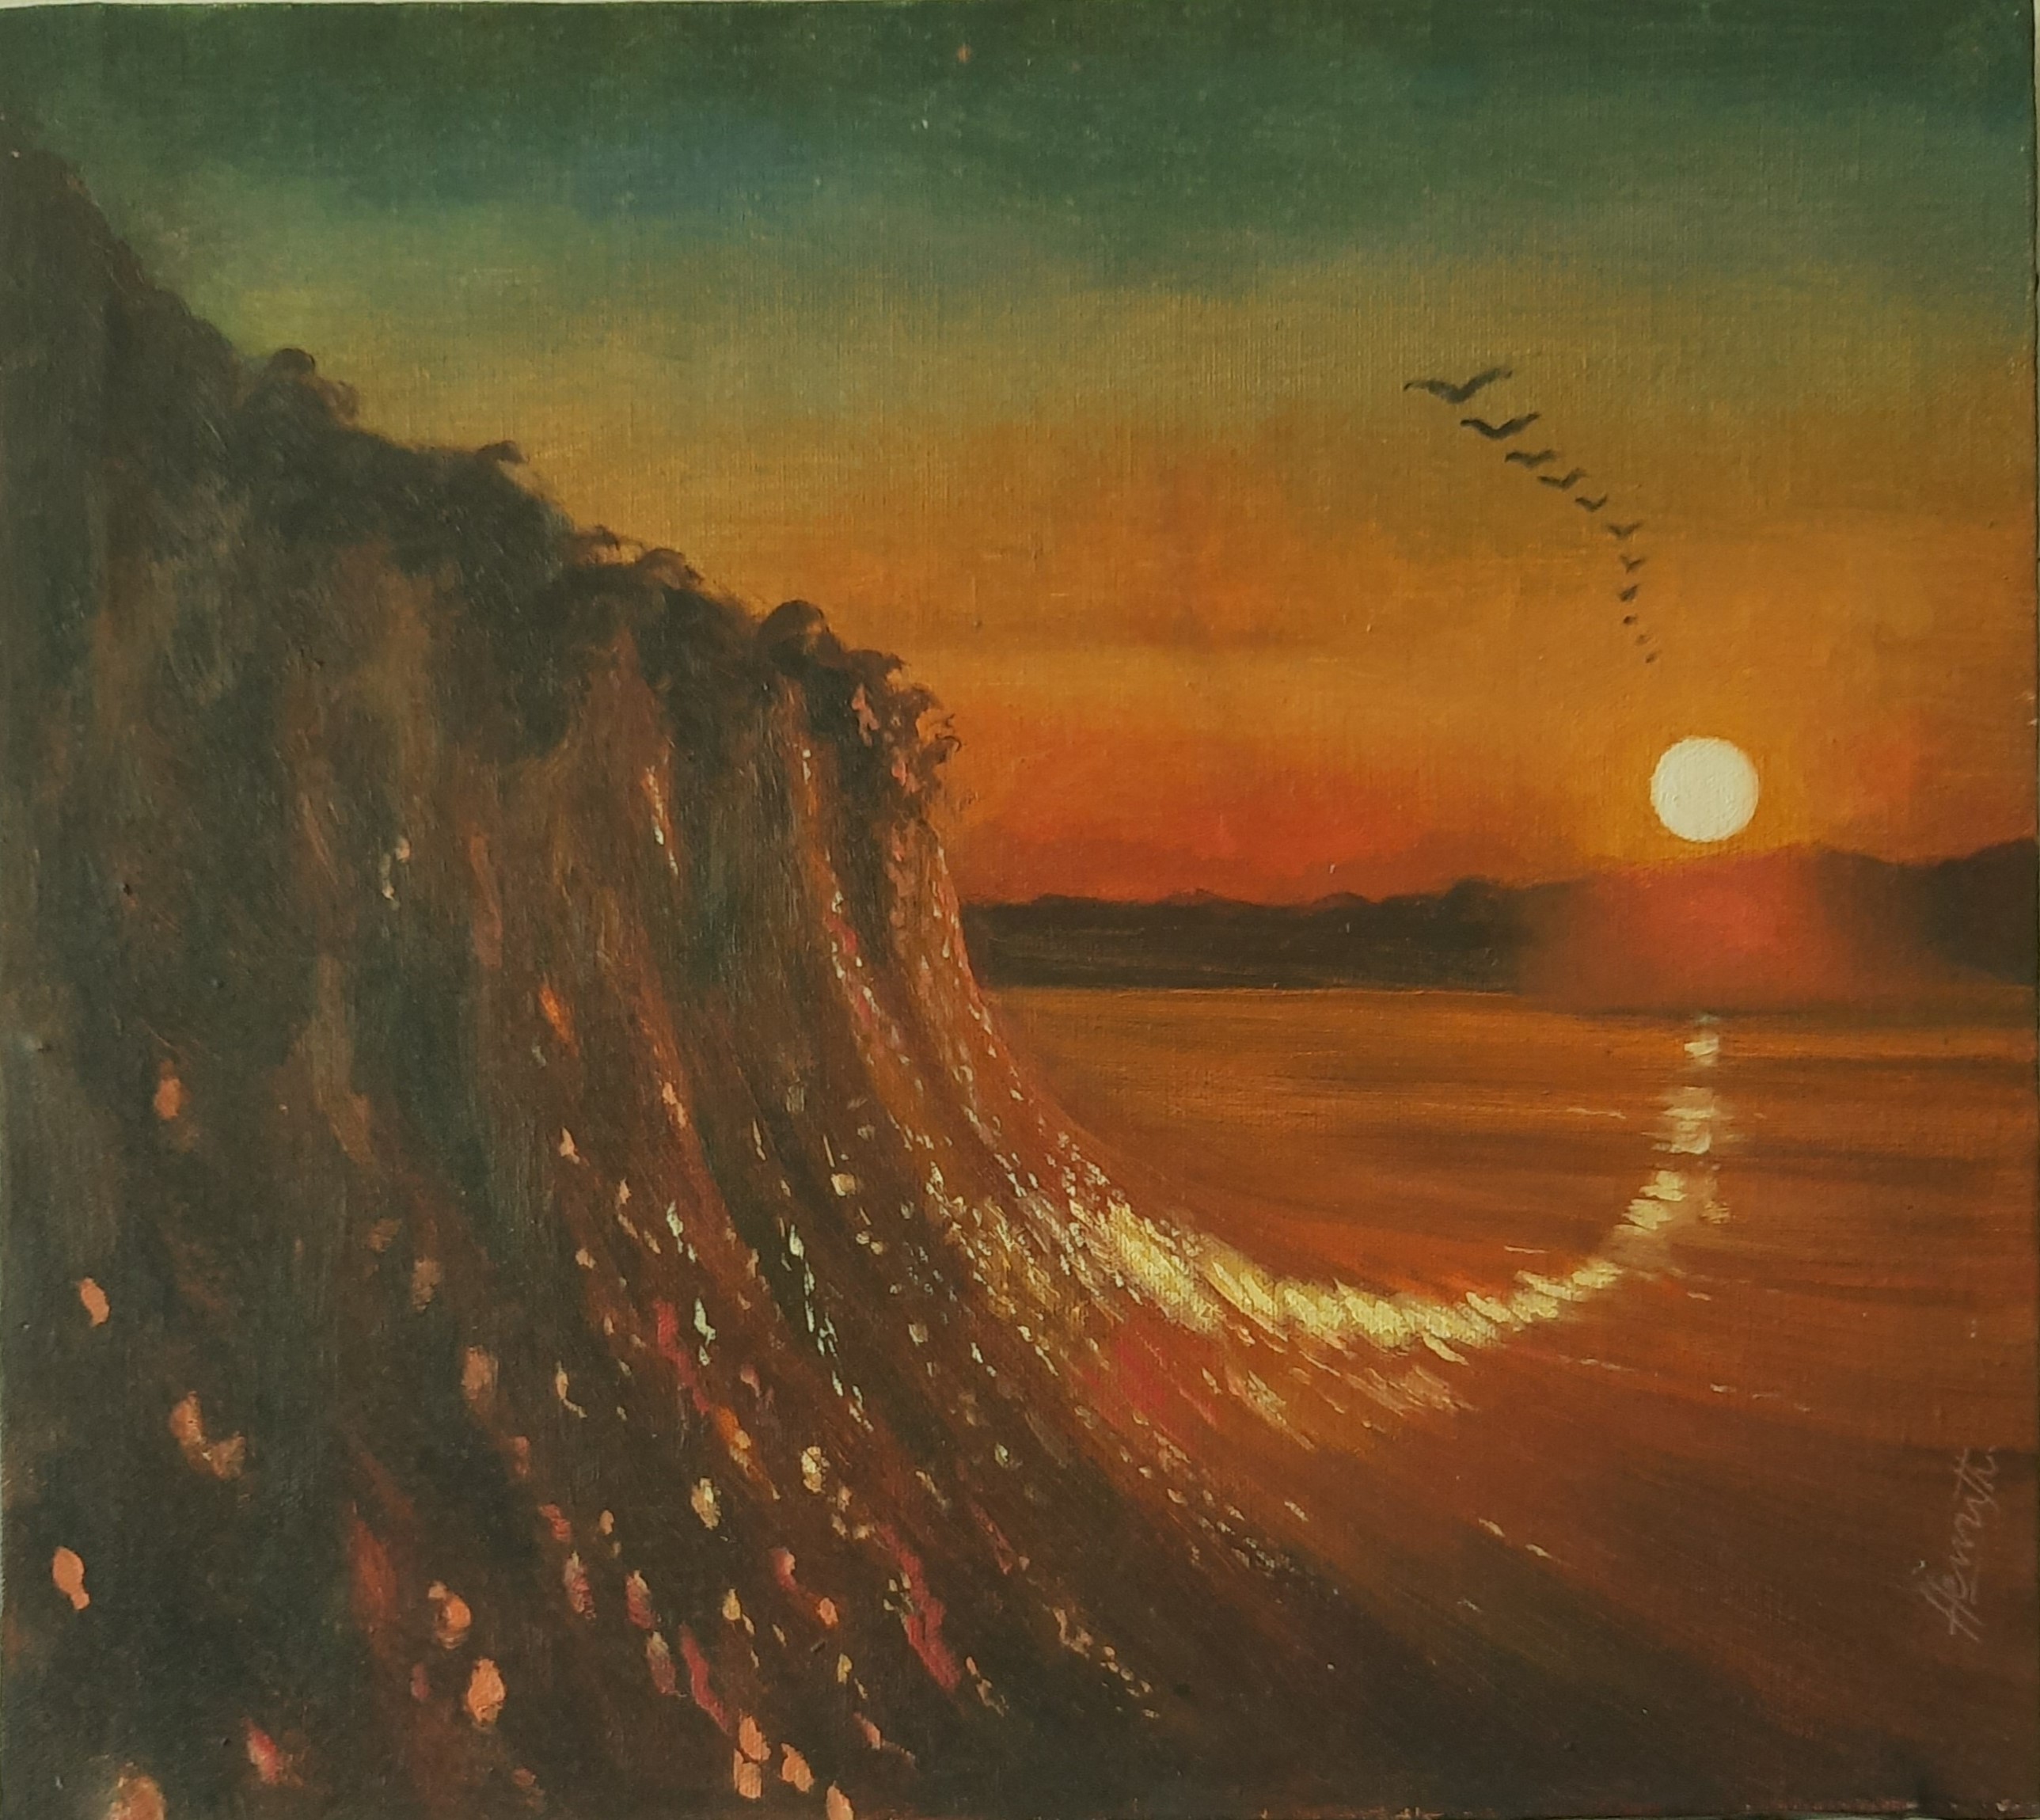 SEA WAVES by Hemantha Bogahawaththa